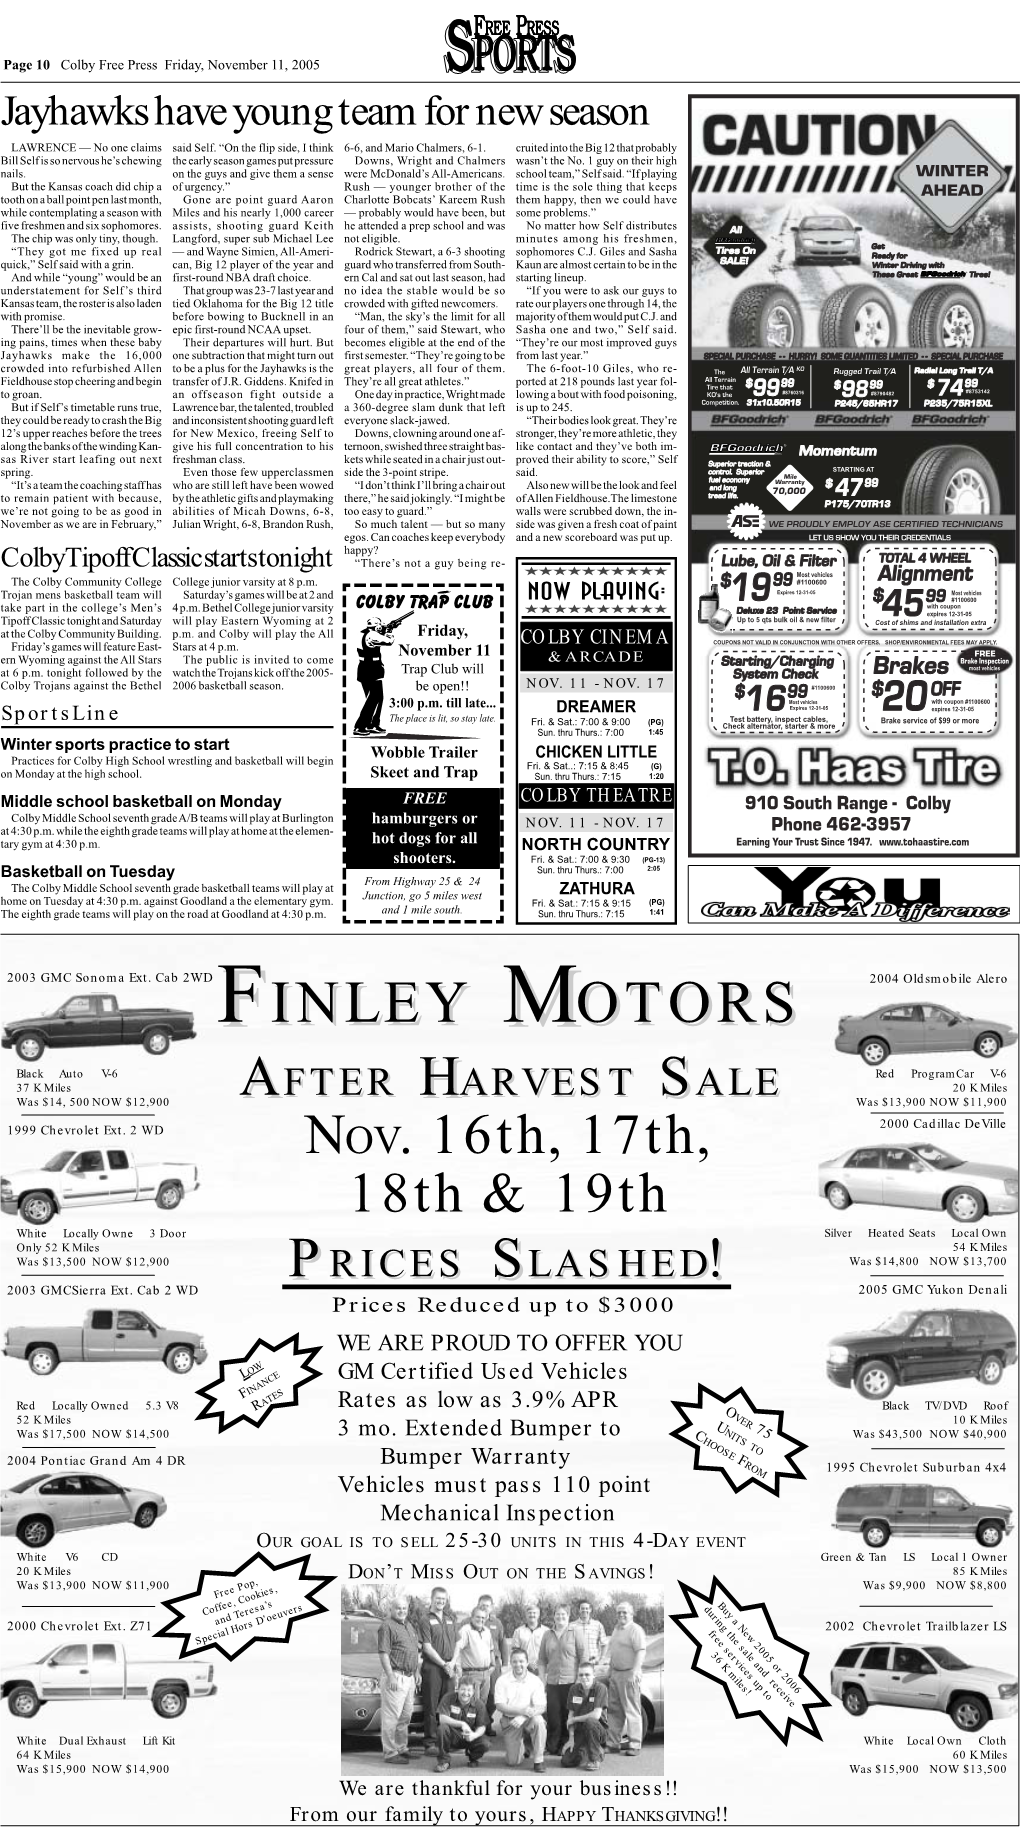 Finley Motors